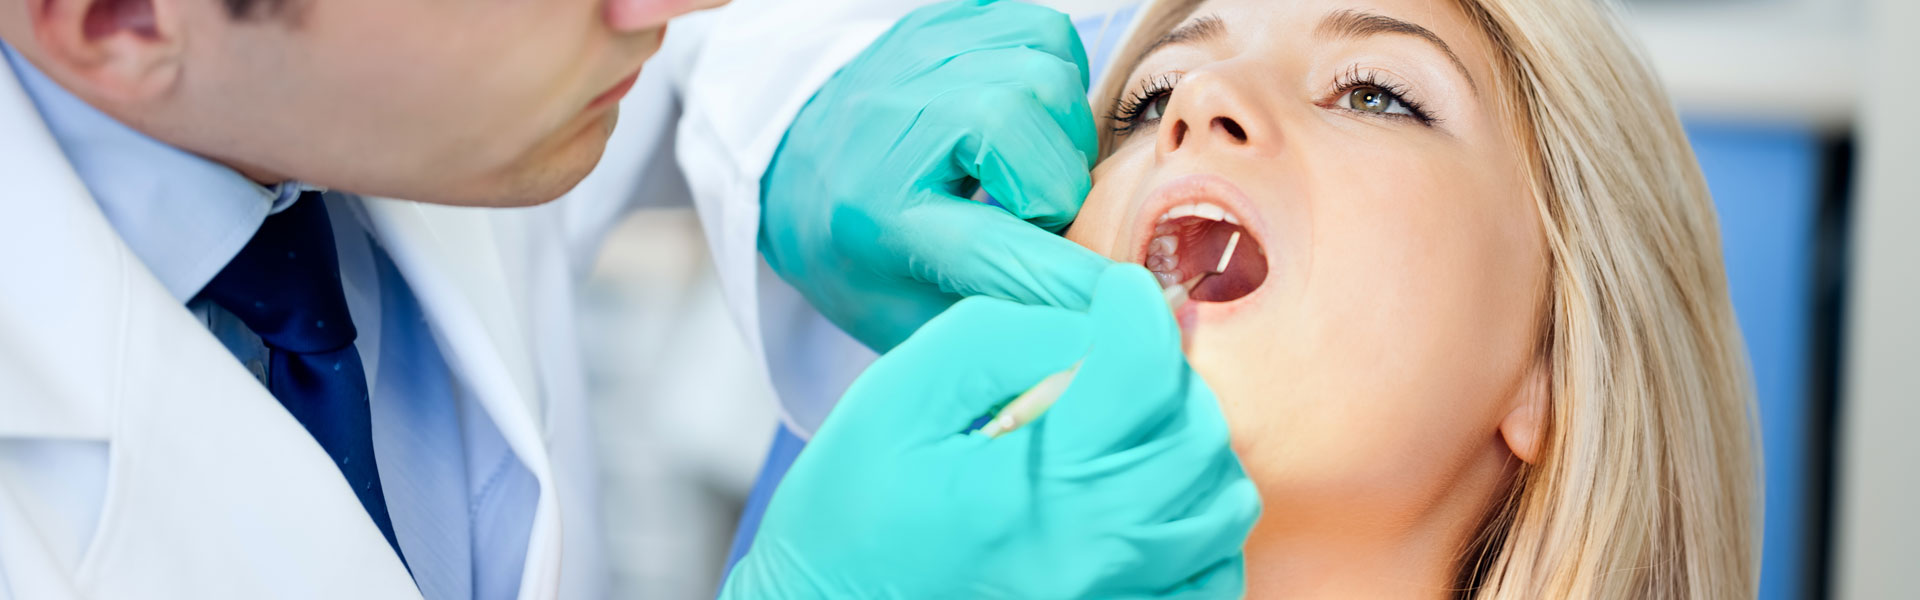 Dentist examining female patient teeth